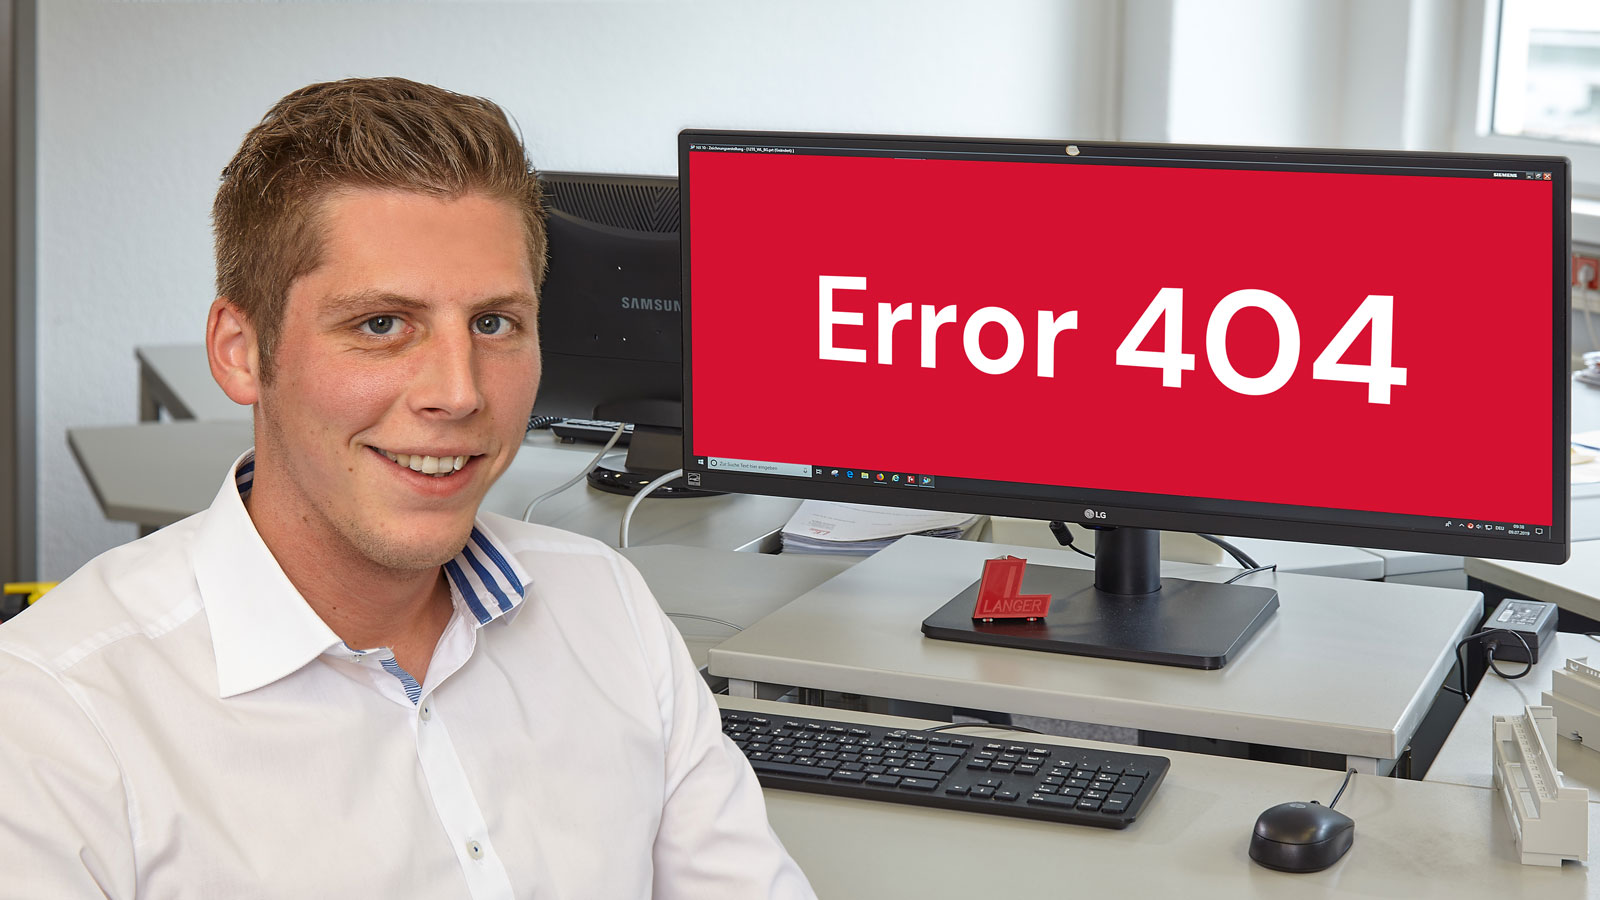 Error 404 - Something went wrong